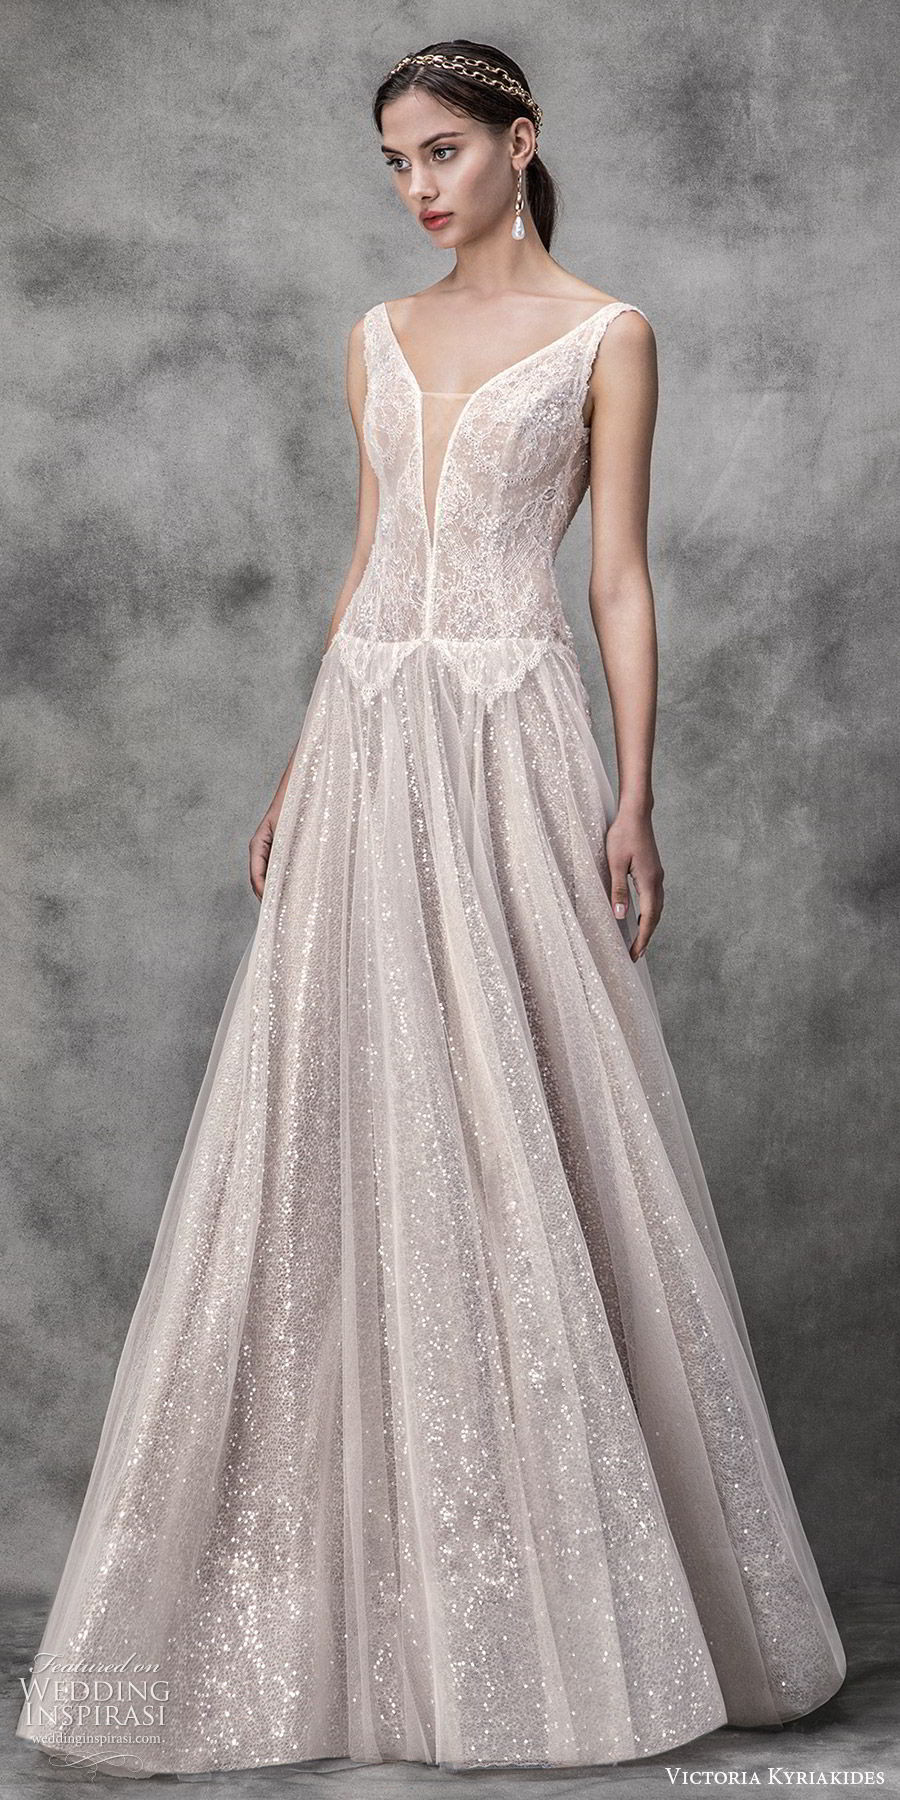 Blush Wedding Gowns 2020
 Victoria Kyriakides Spring 2020 Wedding Dresses